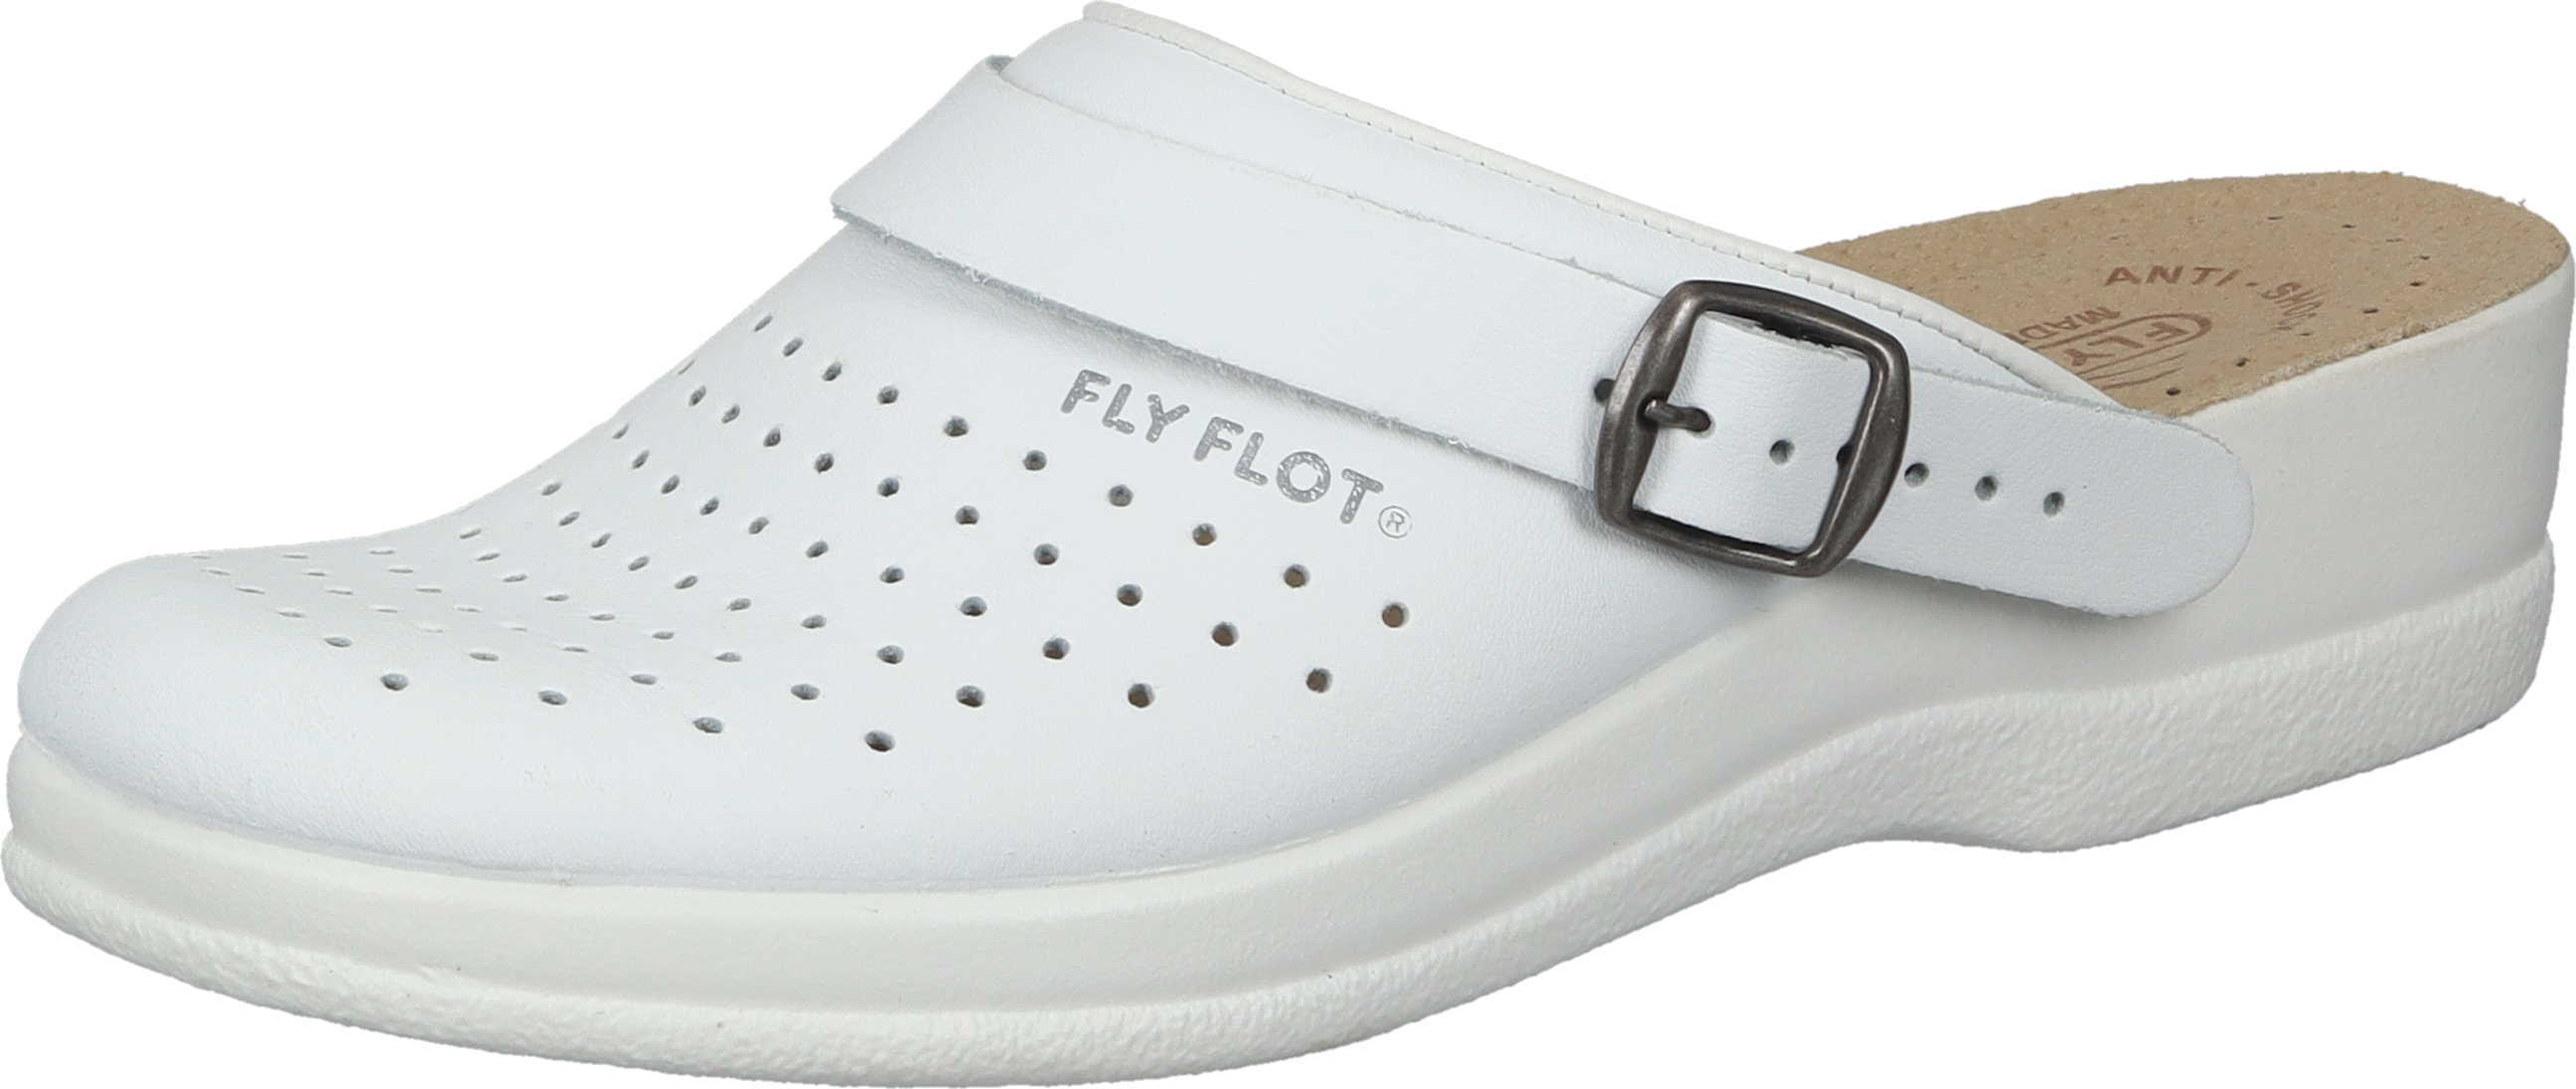 Тапочки FlyFlot Pantoffeln, белый